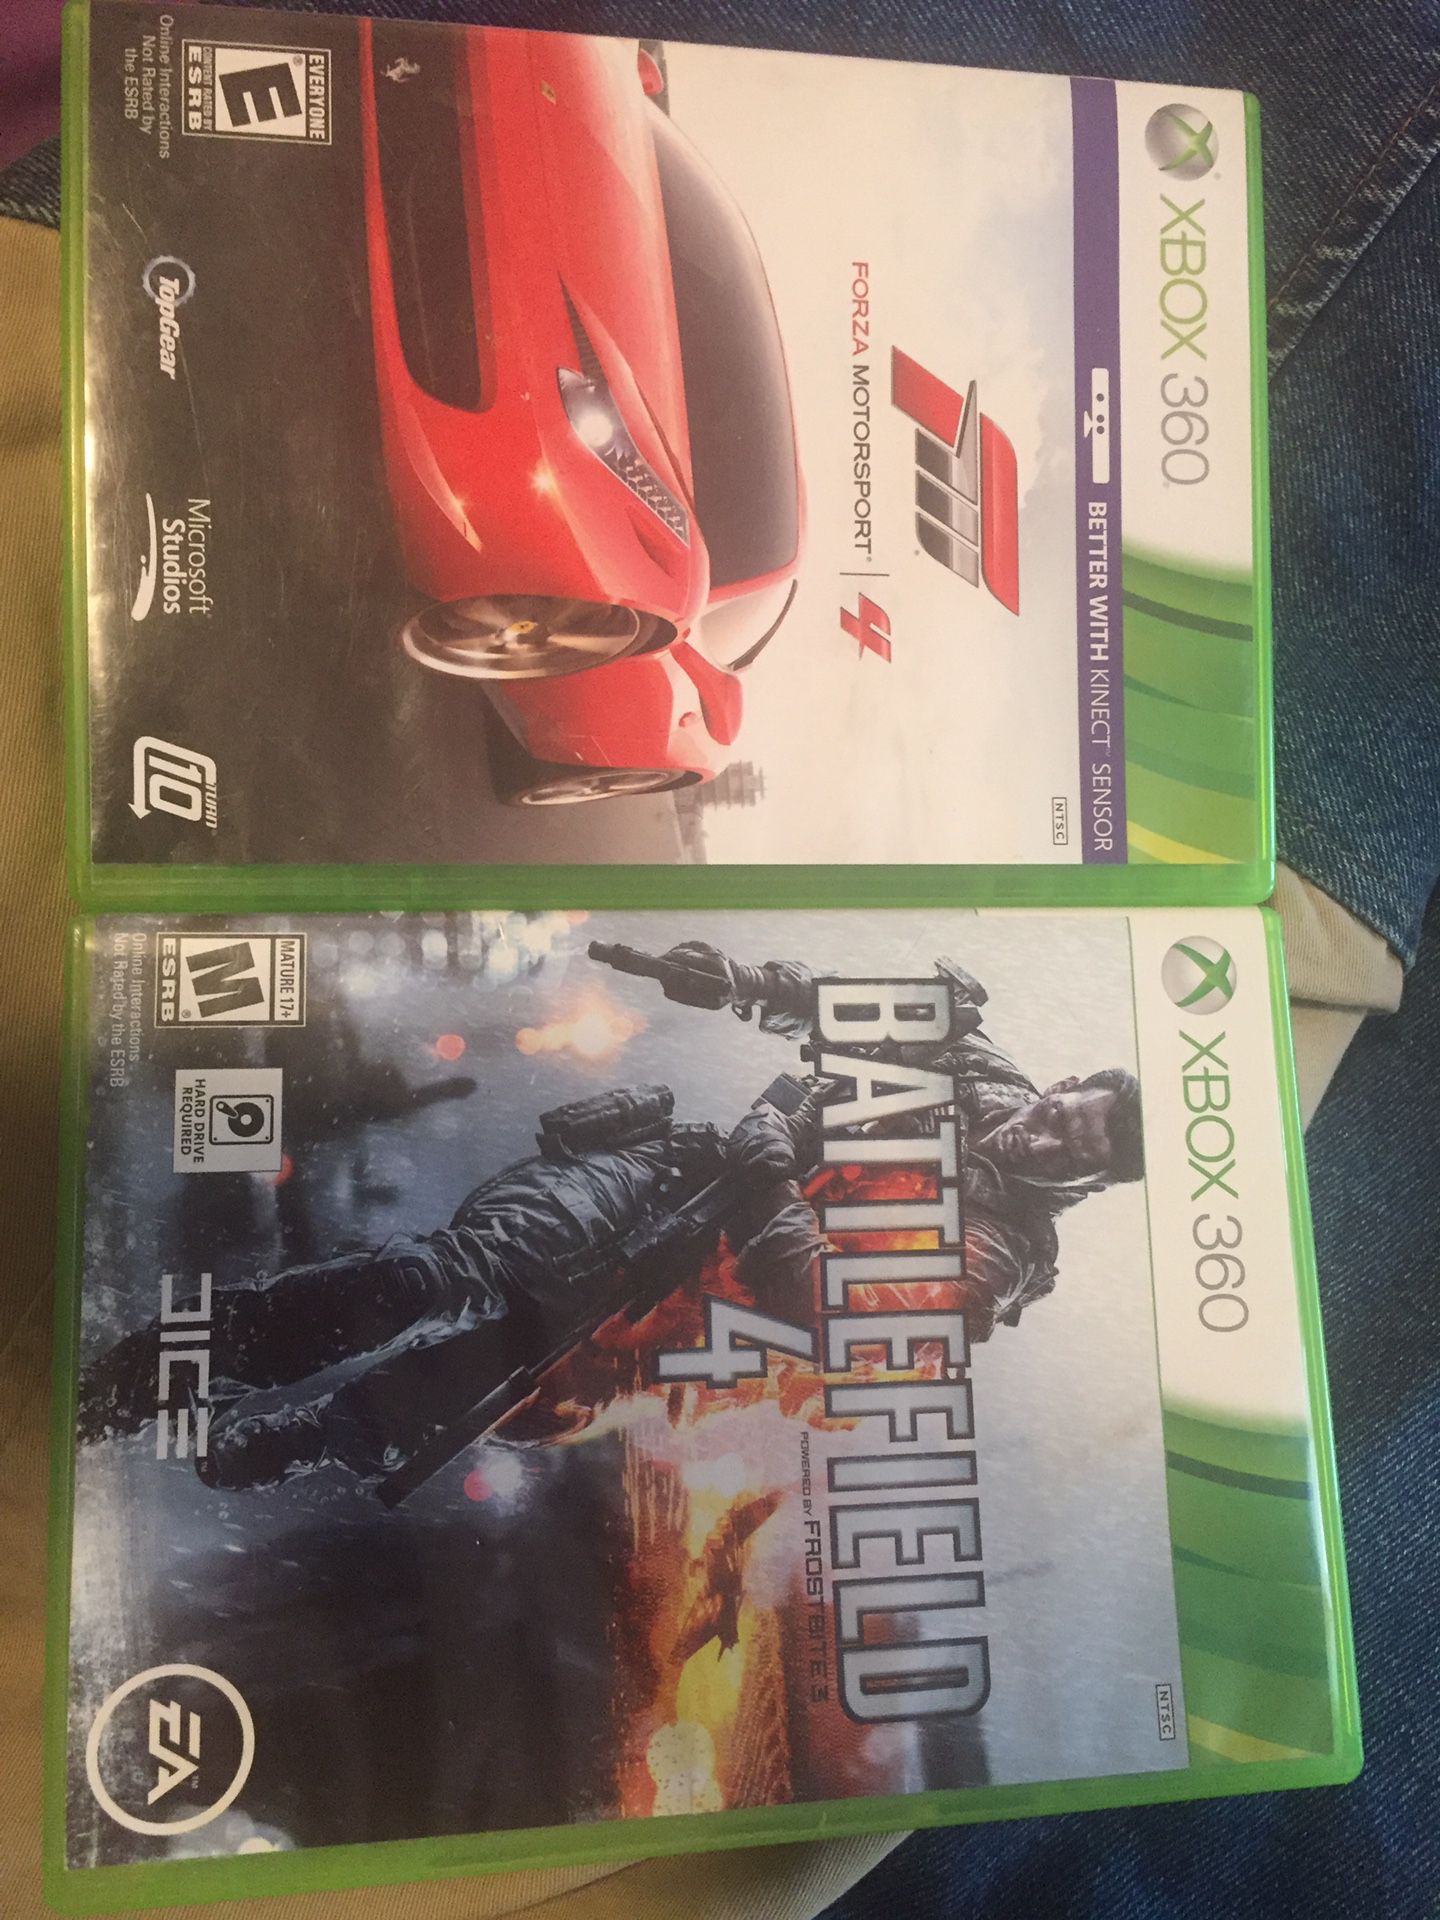 Xbox 360 games, $15